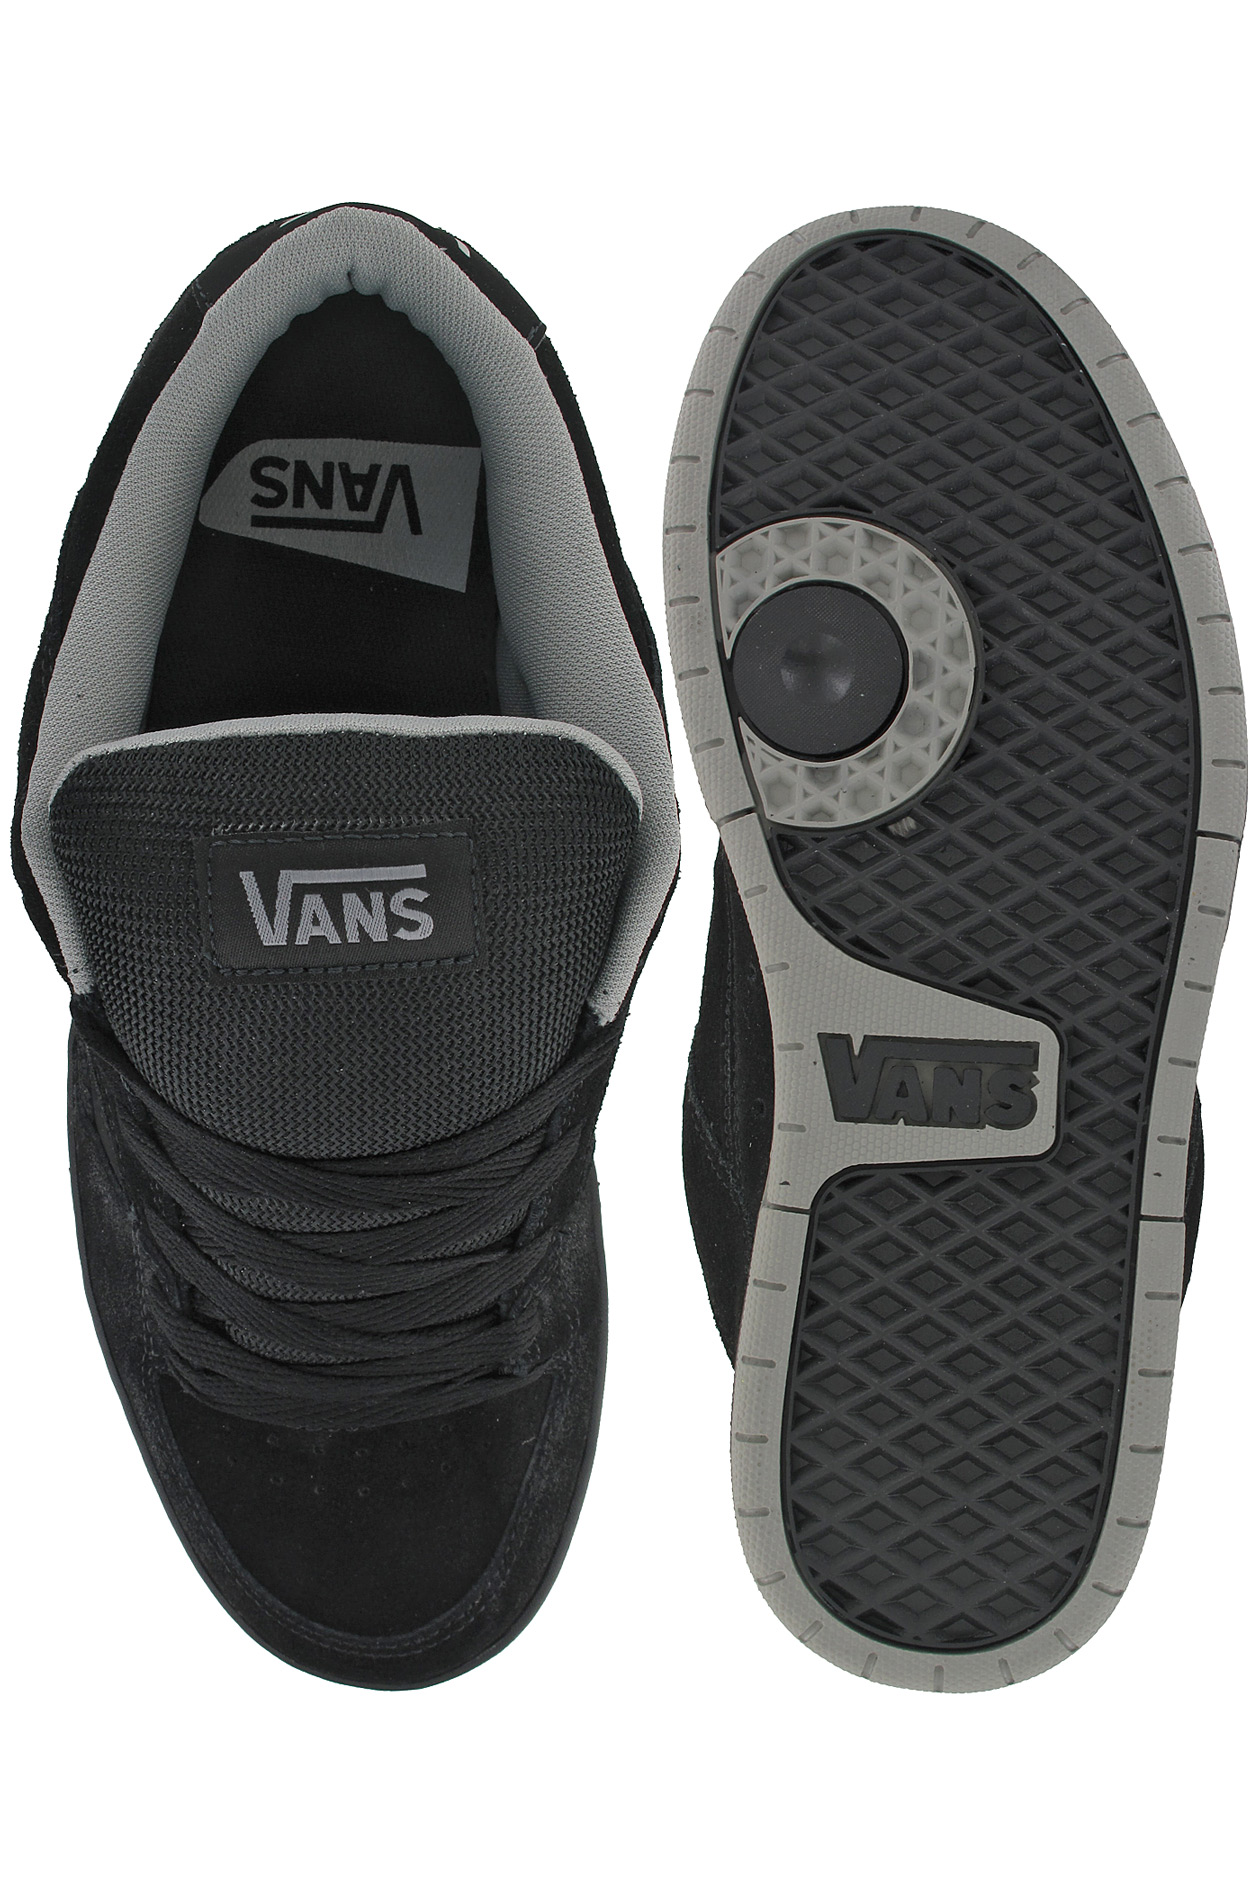 chaussures vans churchill grey black